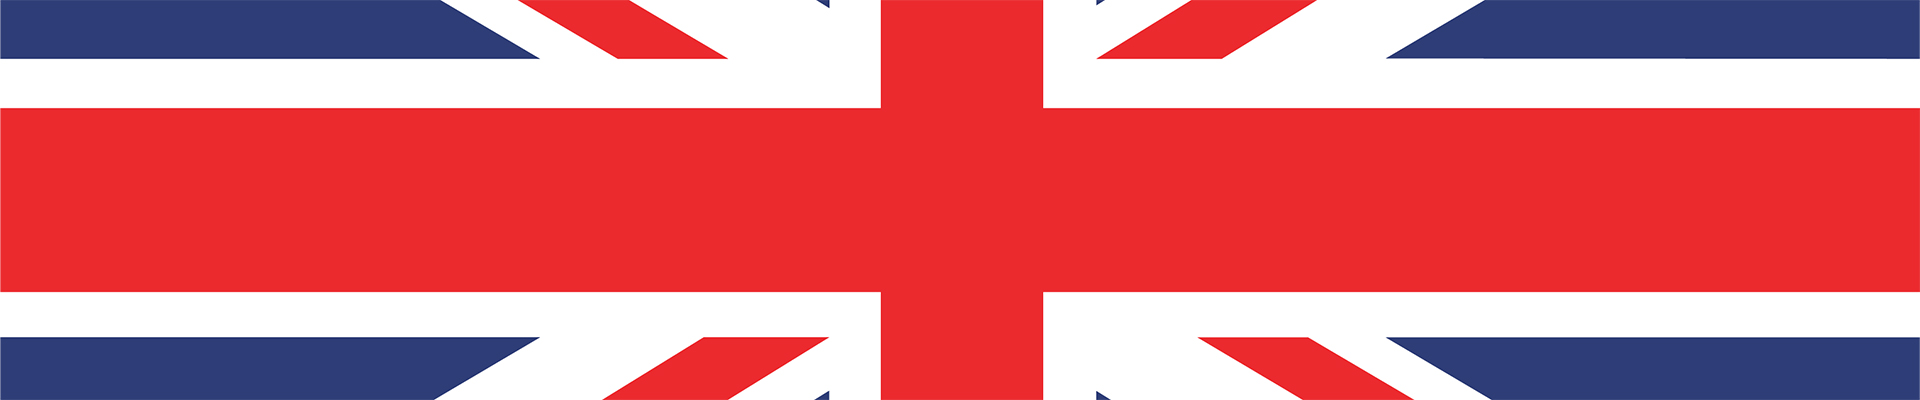 Djokovic vs Khachanov en direct – drapeau britannique